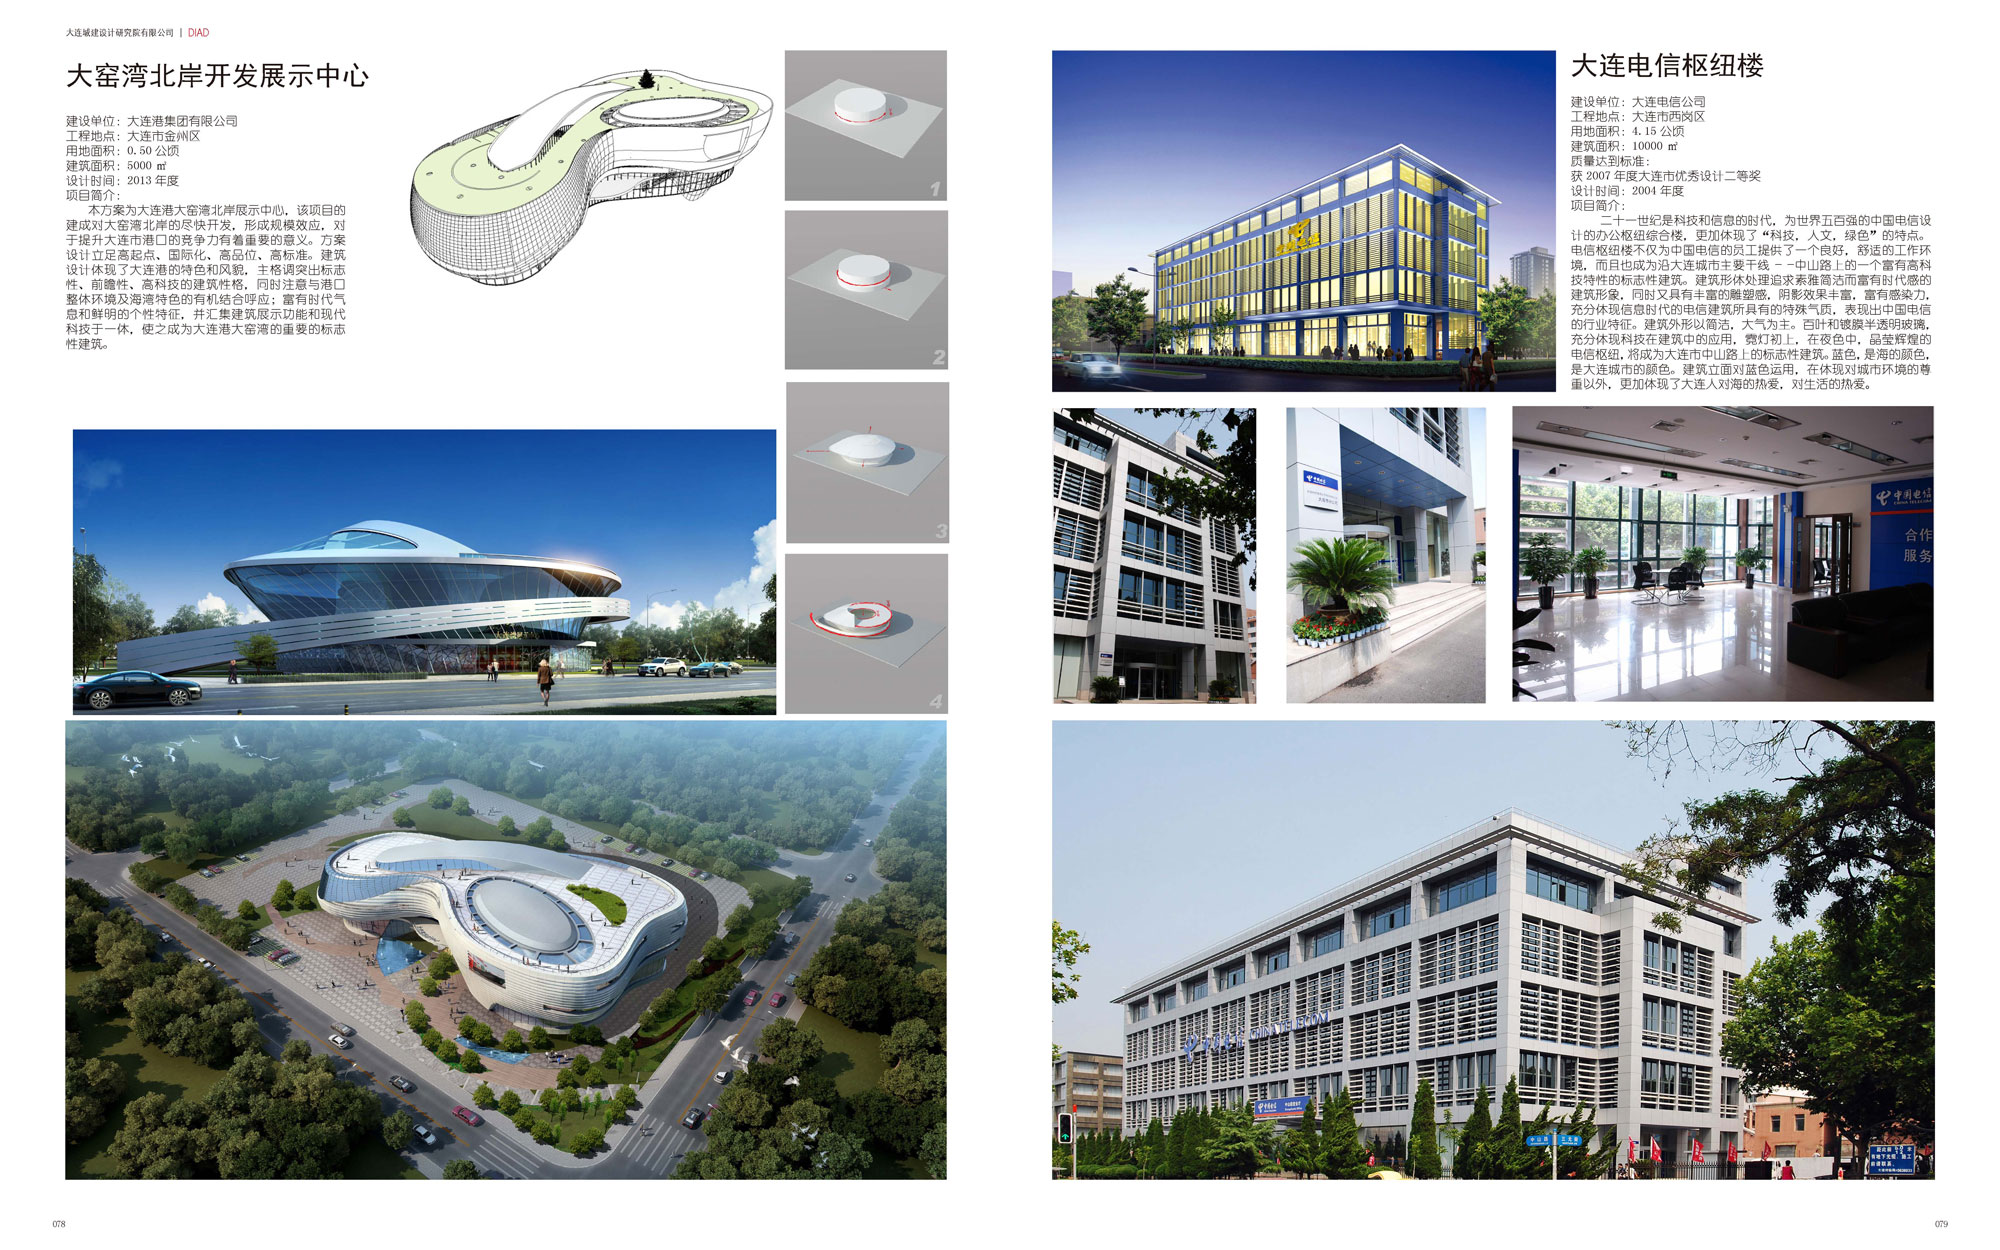 Dayao Bay North Bank Development Exhibition Center & Dalian Telecom Hub Building